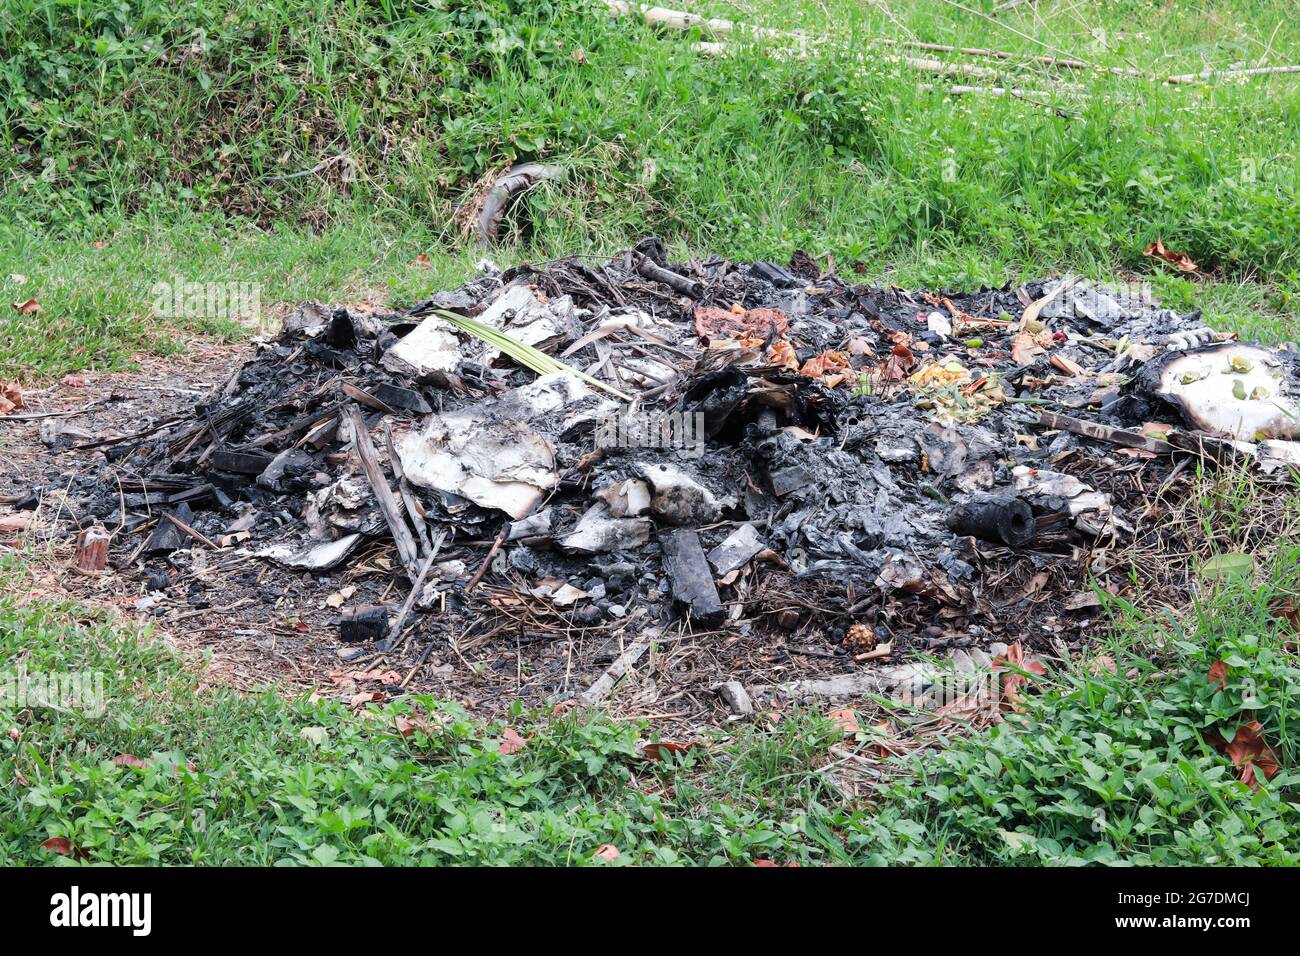 Brennen Müllhaufen in Grünflächen schaffen Verschmutzung. Stockfoto